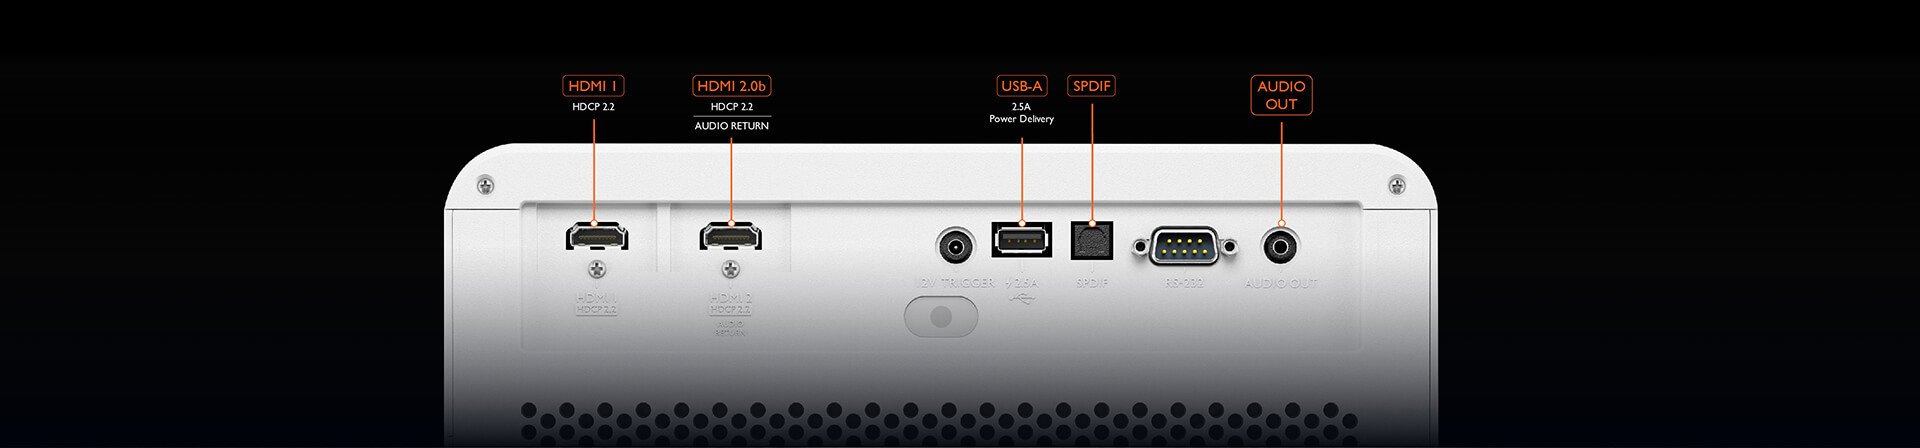 BenQ X1300i universal connectivity of dual HDMI 2.0b (HDCP2.2) ports and advanced AV controls